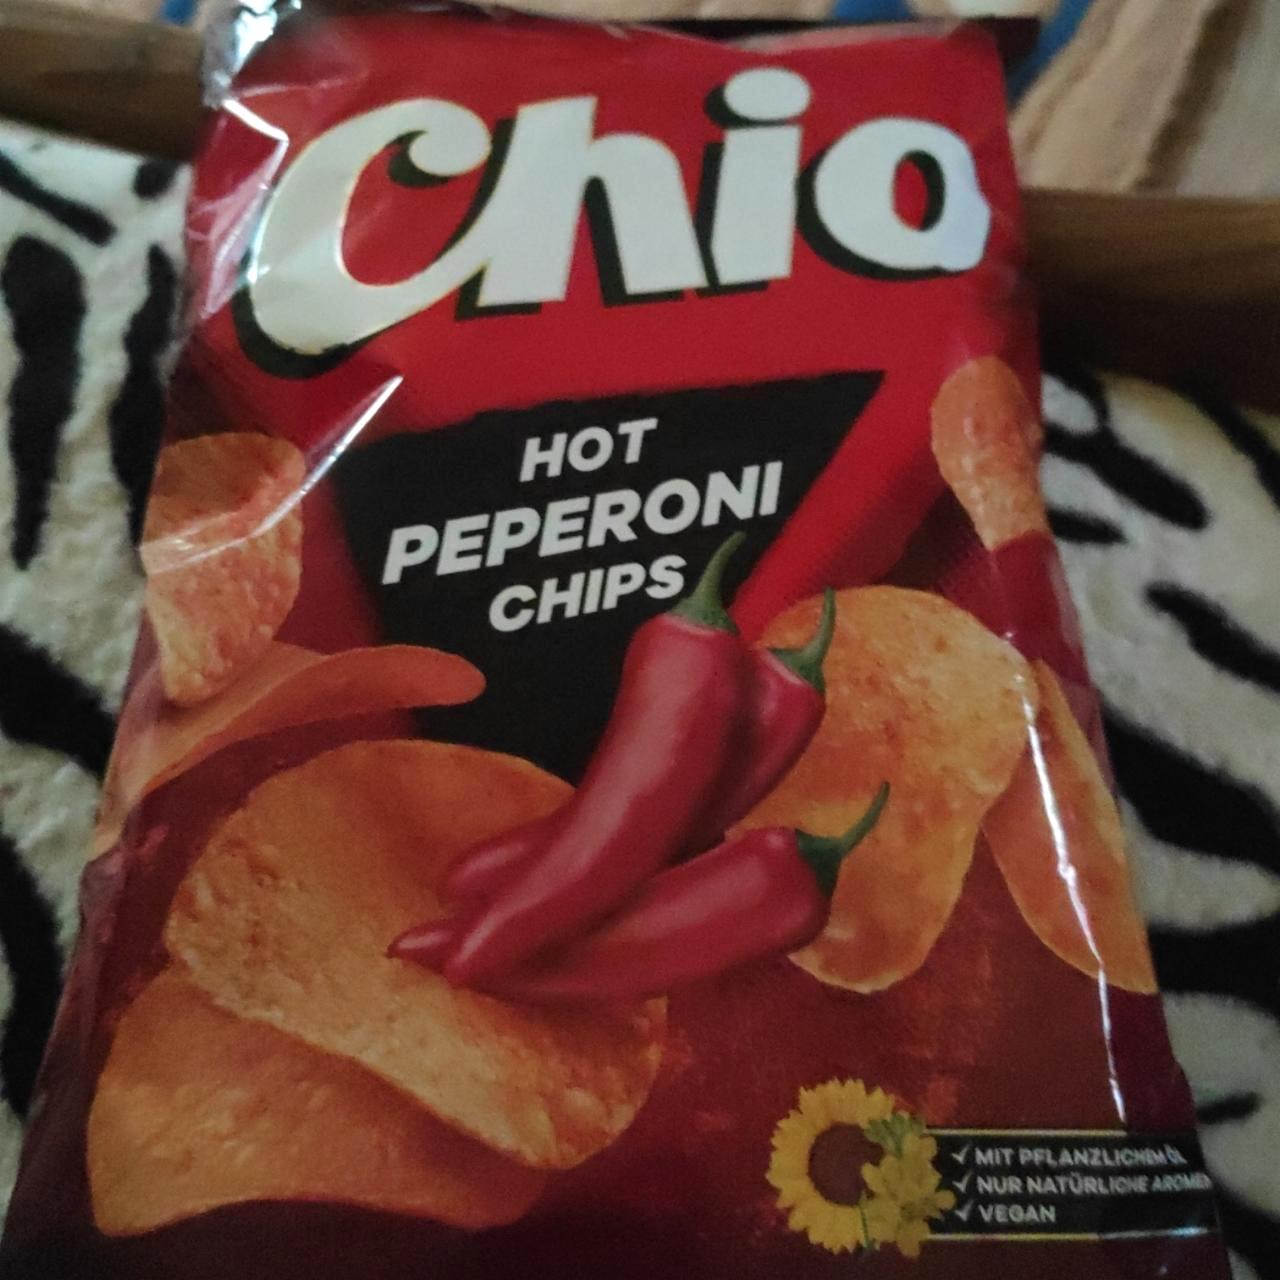 Képek - Hot Peperoni Chips Chio